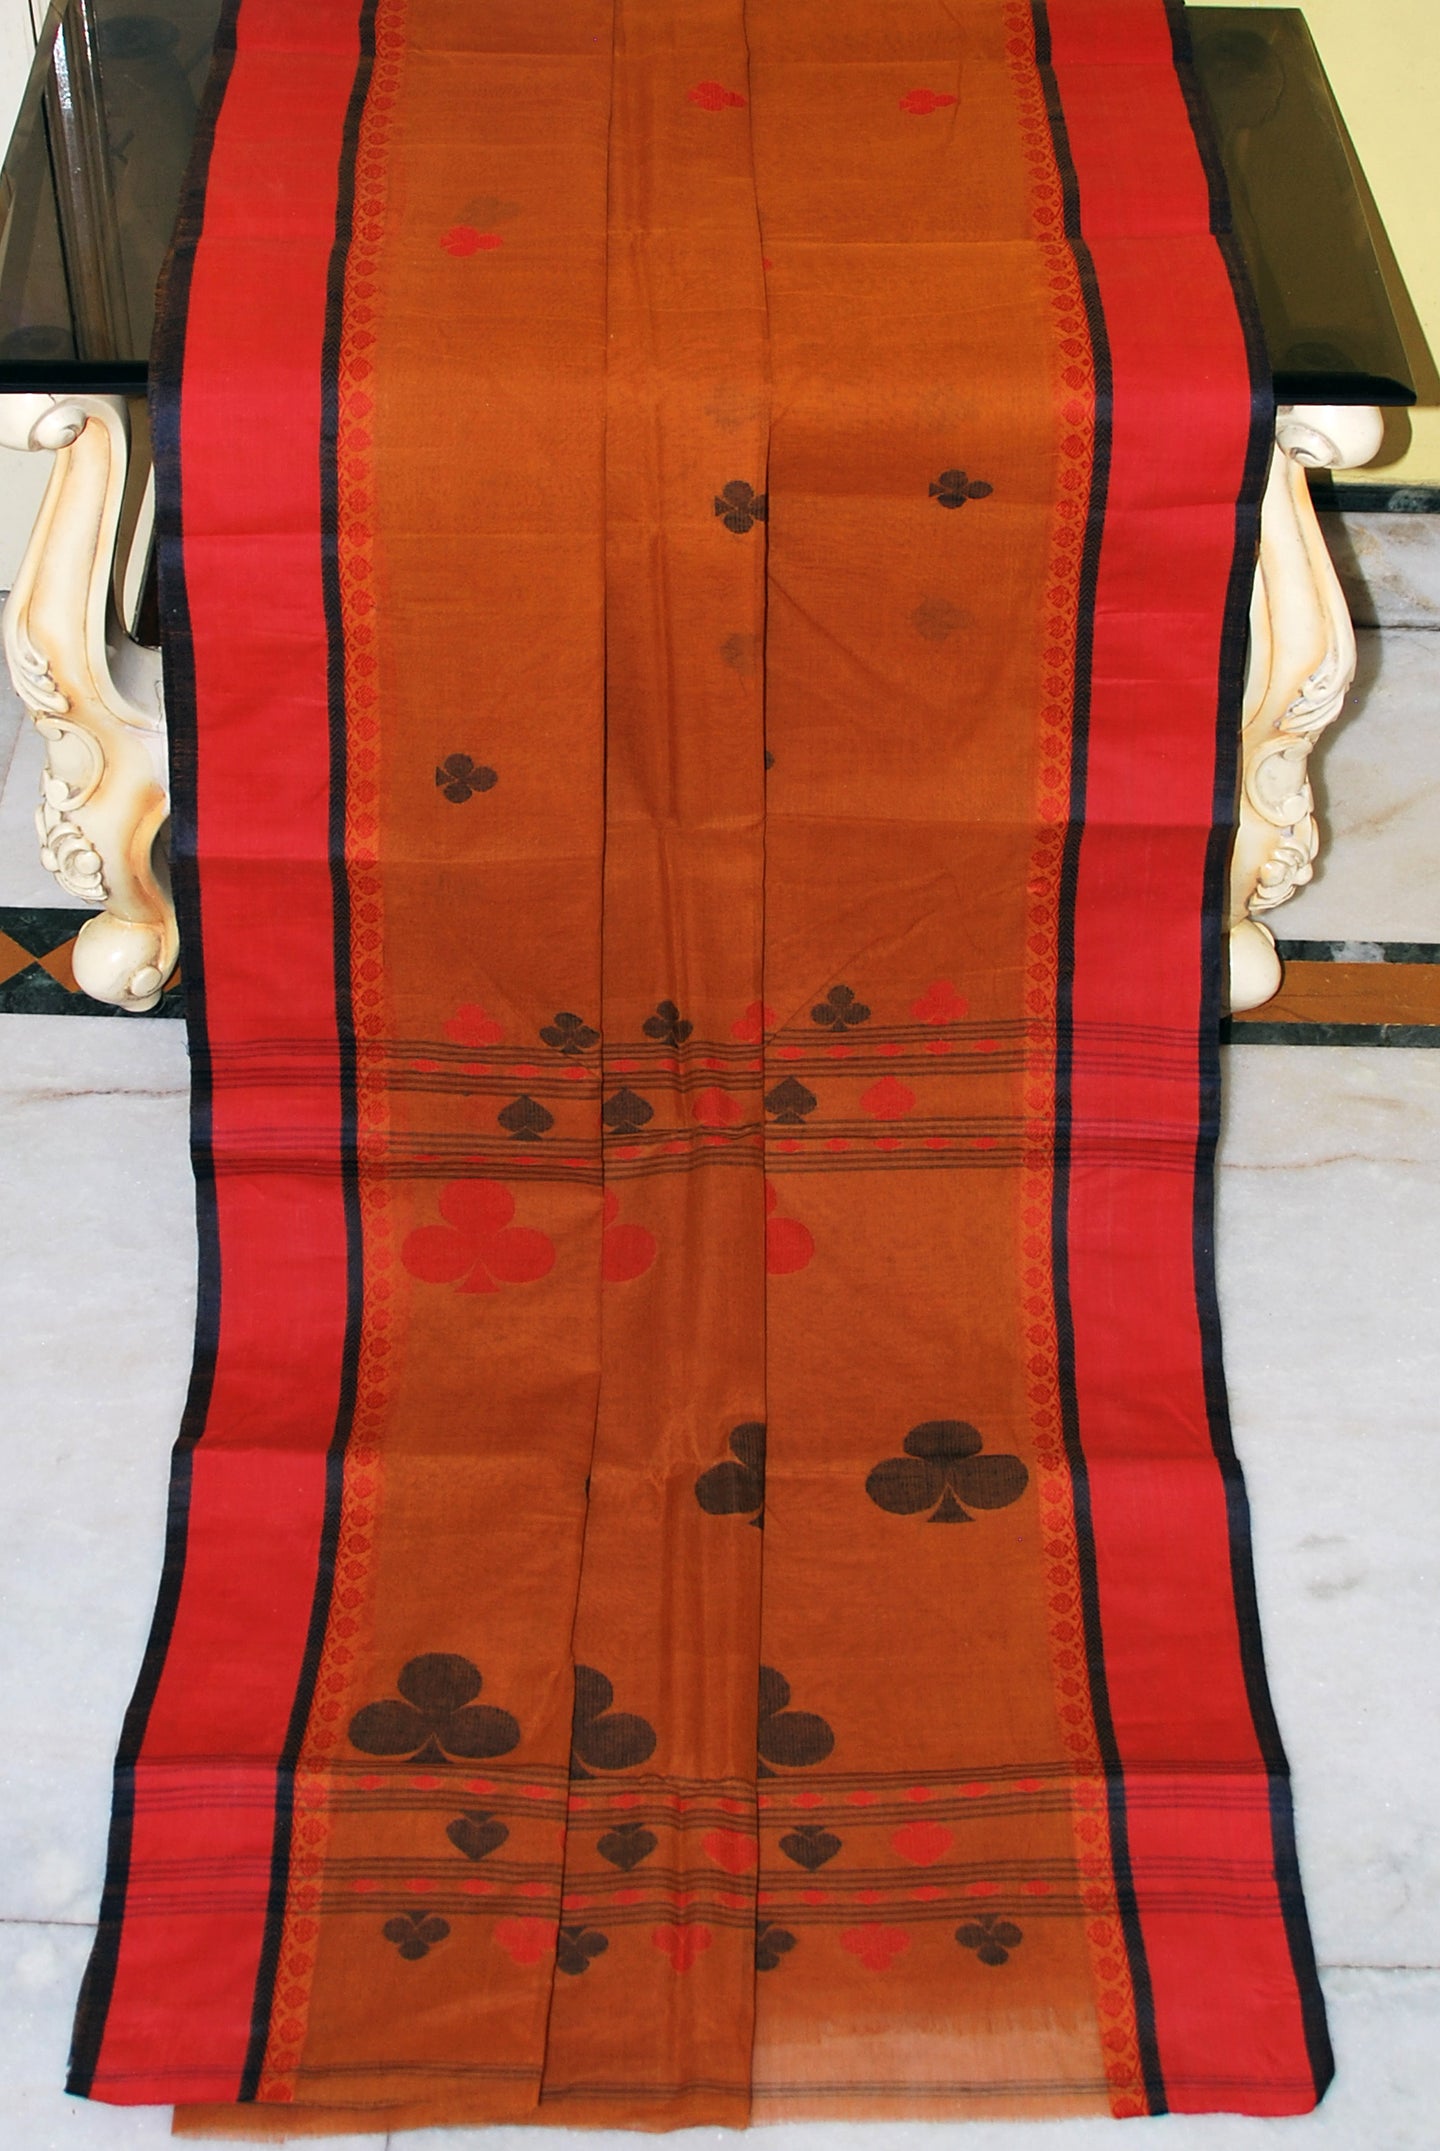 Woven Matta Nakshi Border Premium Quality Bengal Handloom Cotton Saree in Ginger Brown, Dark Red and Black